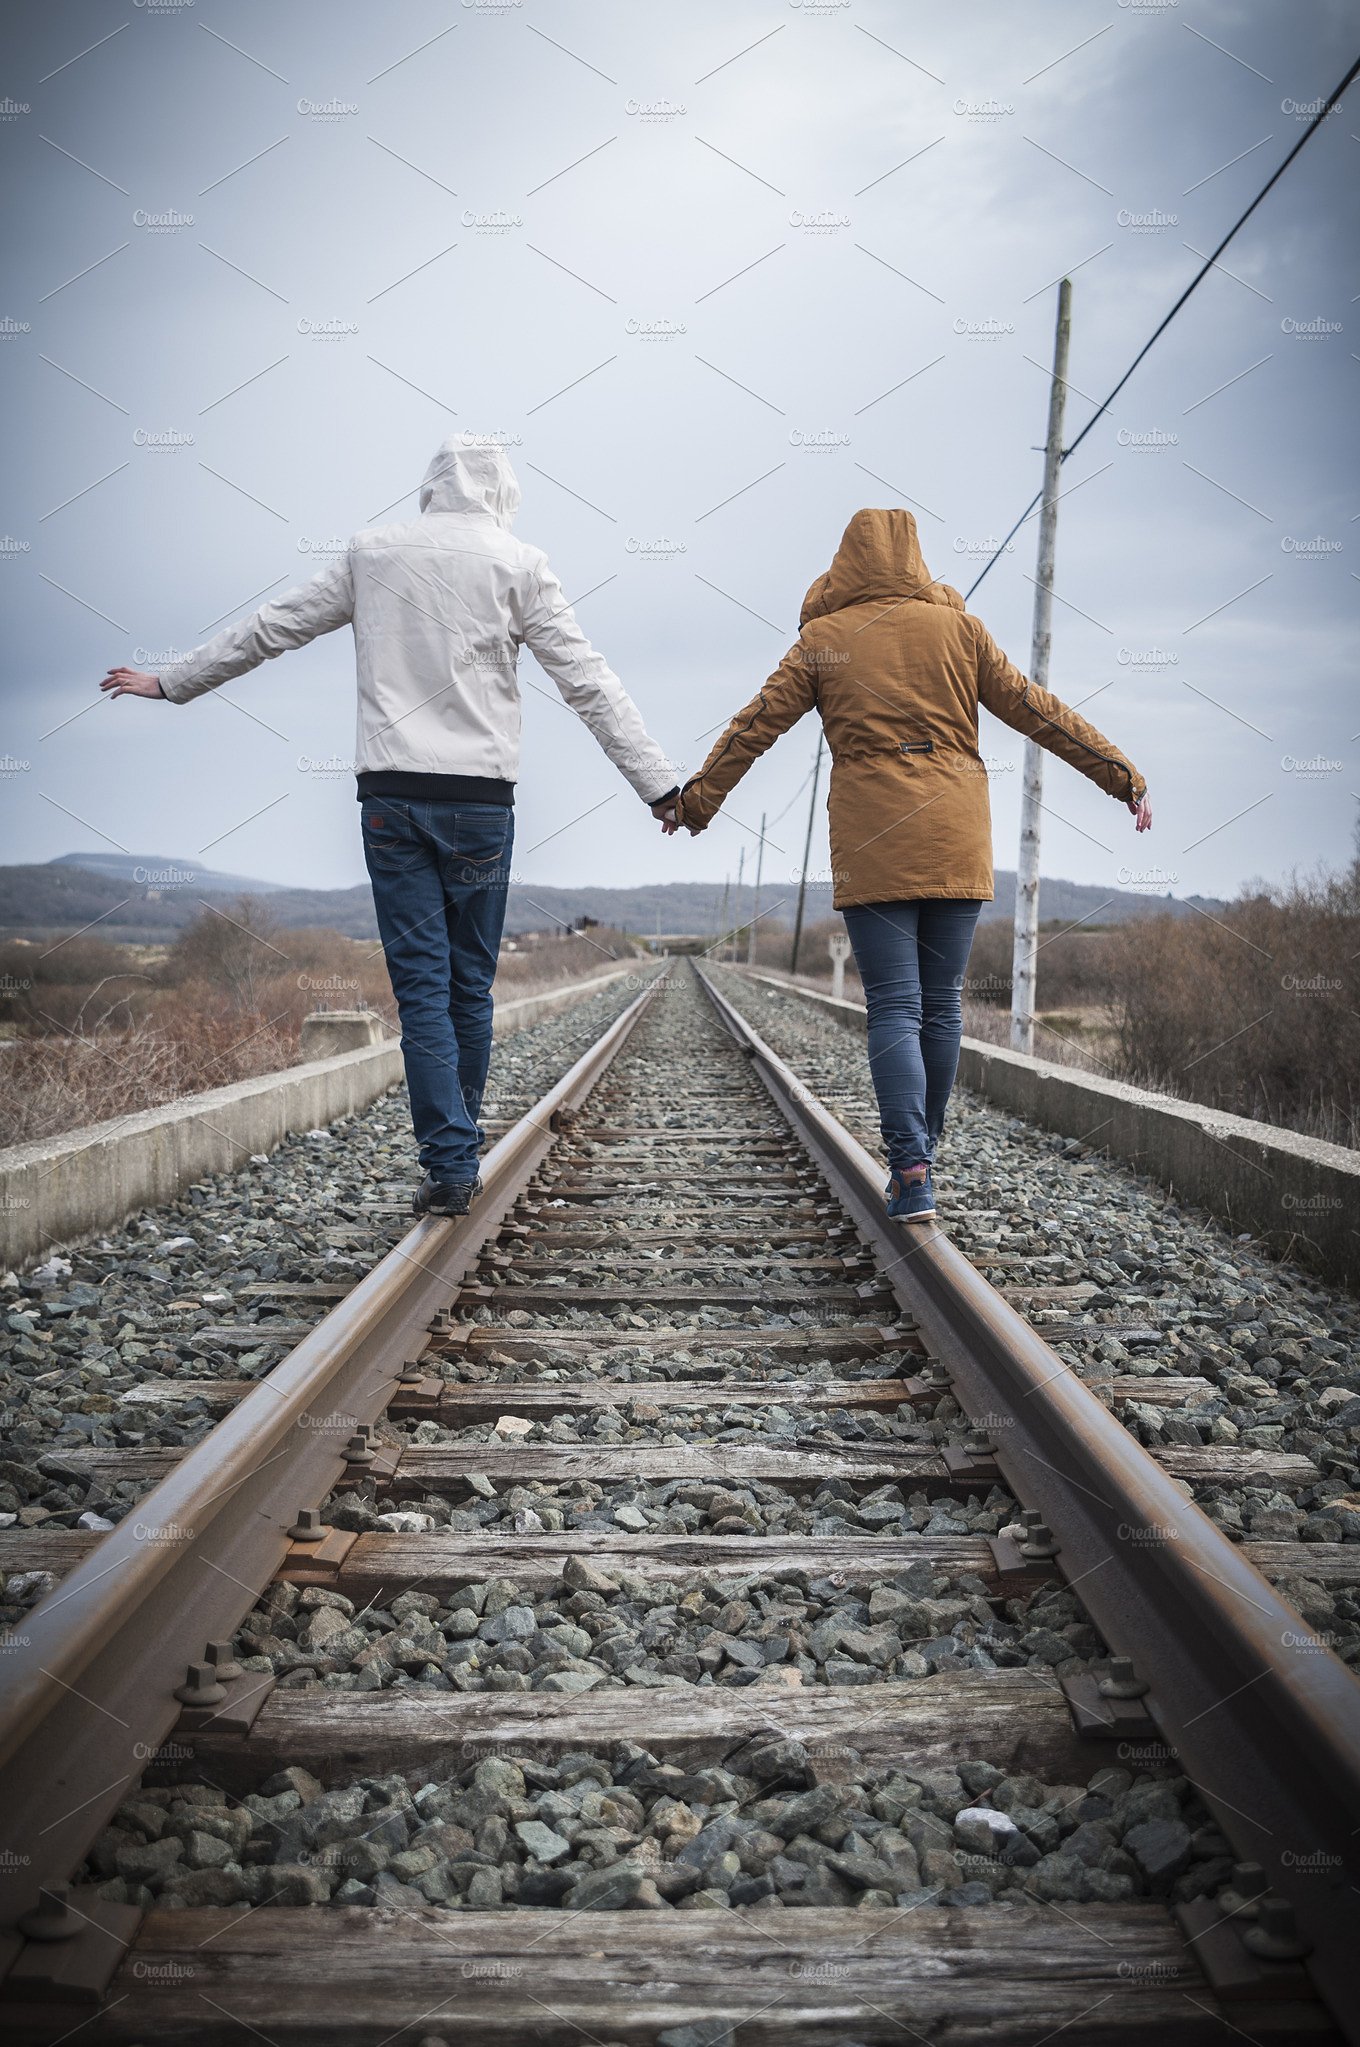 Girl walking on train tracks ~ People Photos ~ Creative Market